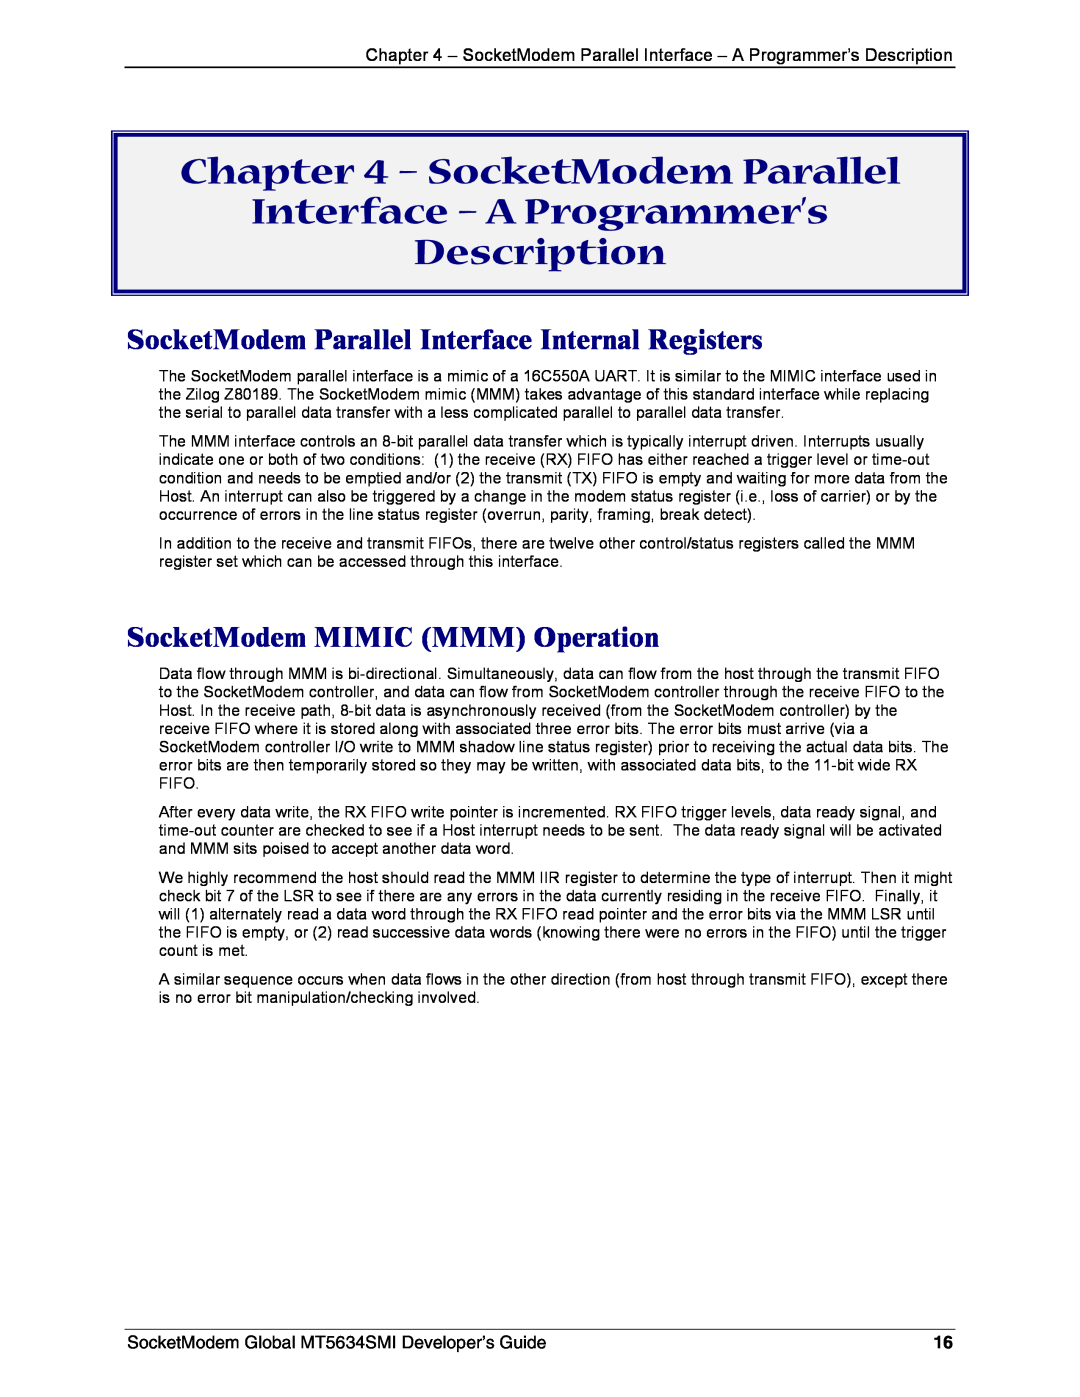 Technics MT5634SMI-92 manual SocketModem Parallel Interface - A Programmer’s, Description, SocketModem MIMIC MMM Operation 